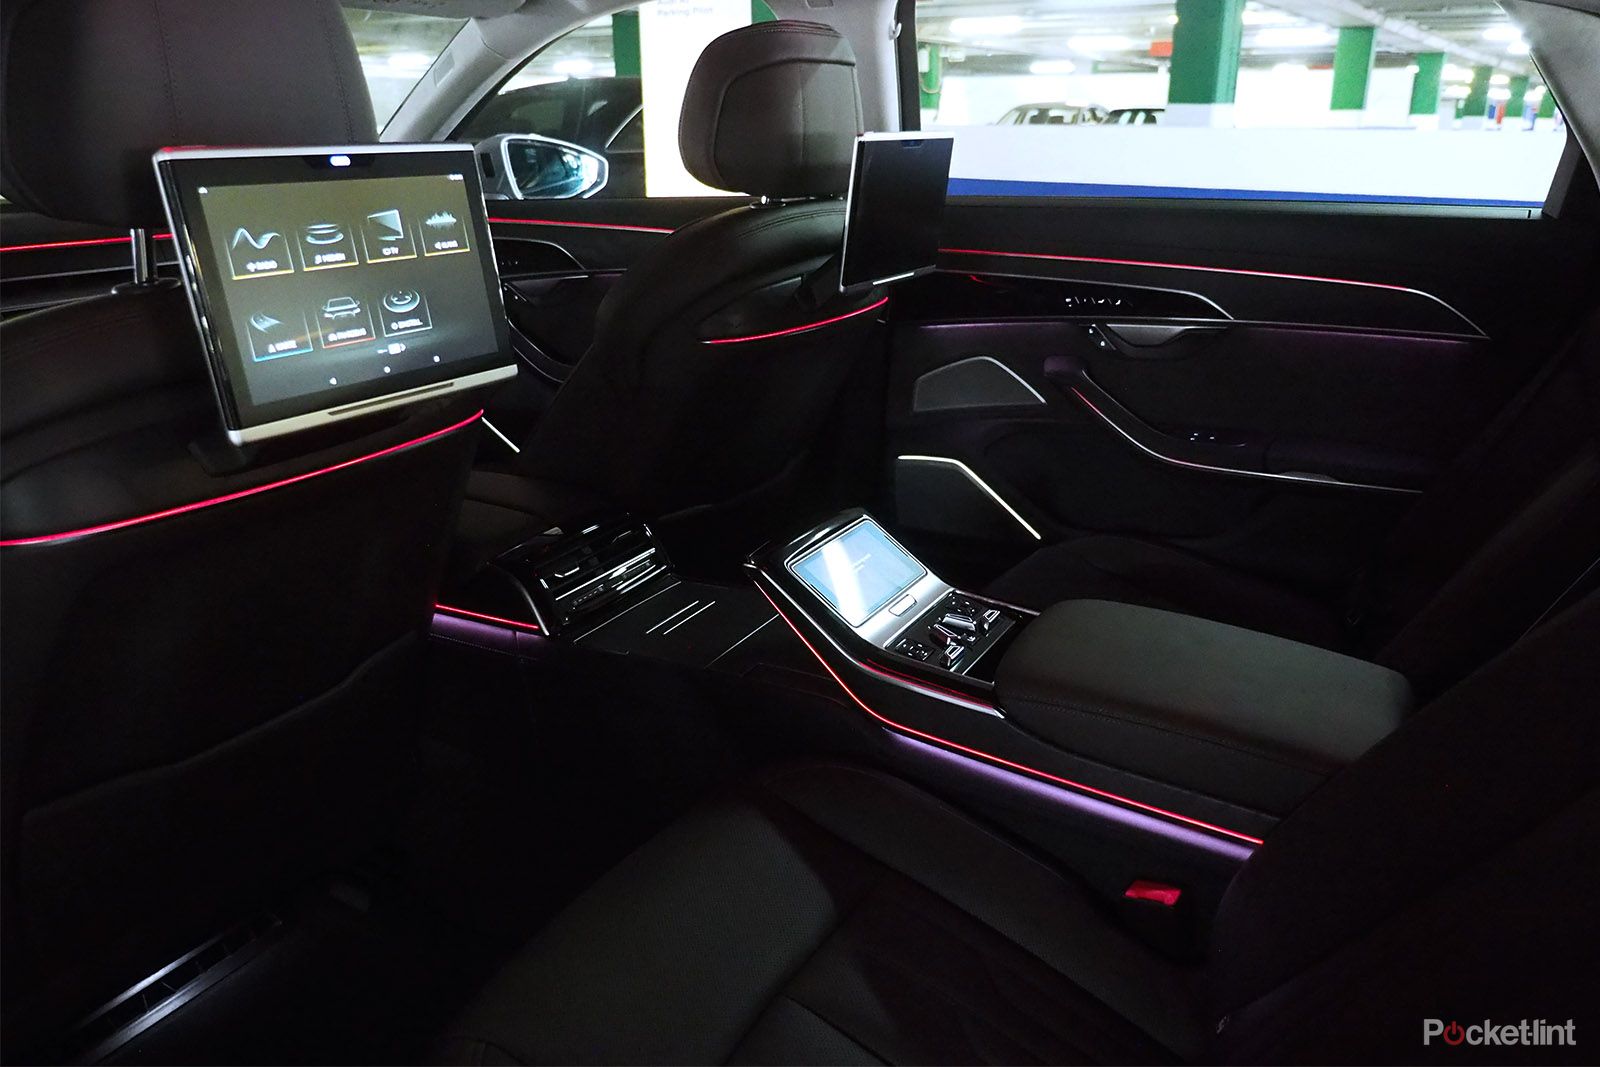 Audi A8 rear interior image 1